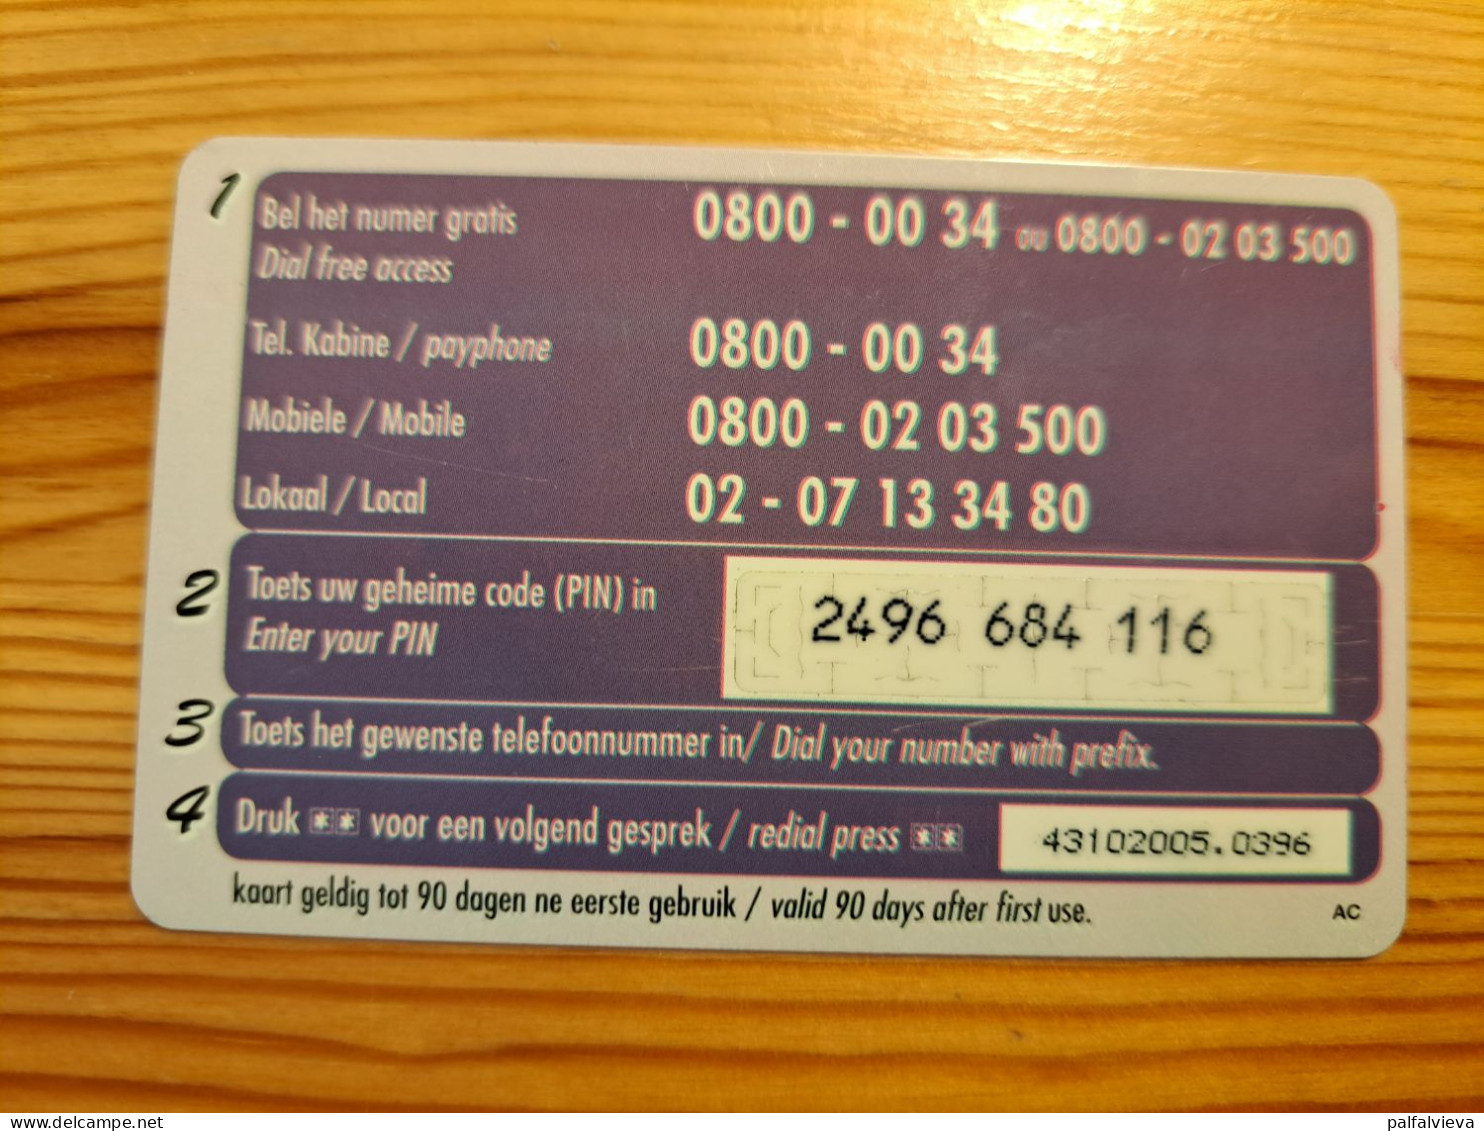 Prepaid Phonecard Netherlands, Hello Mama - Pakistan - [3] Tarjetas Móvil, Prepagadas Y Recargos